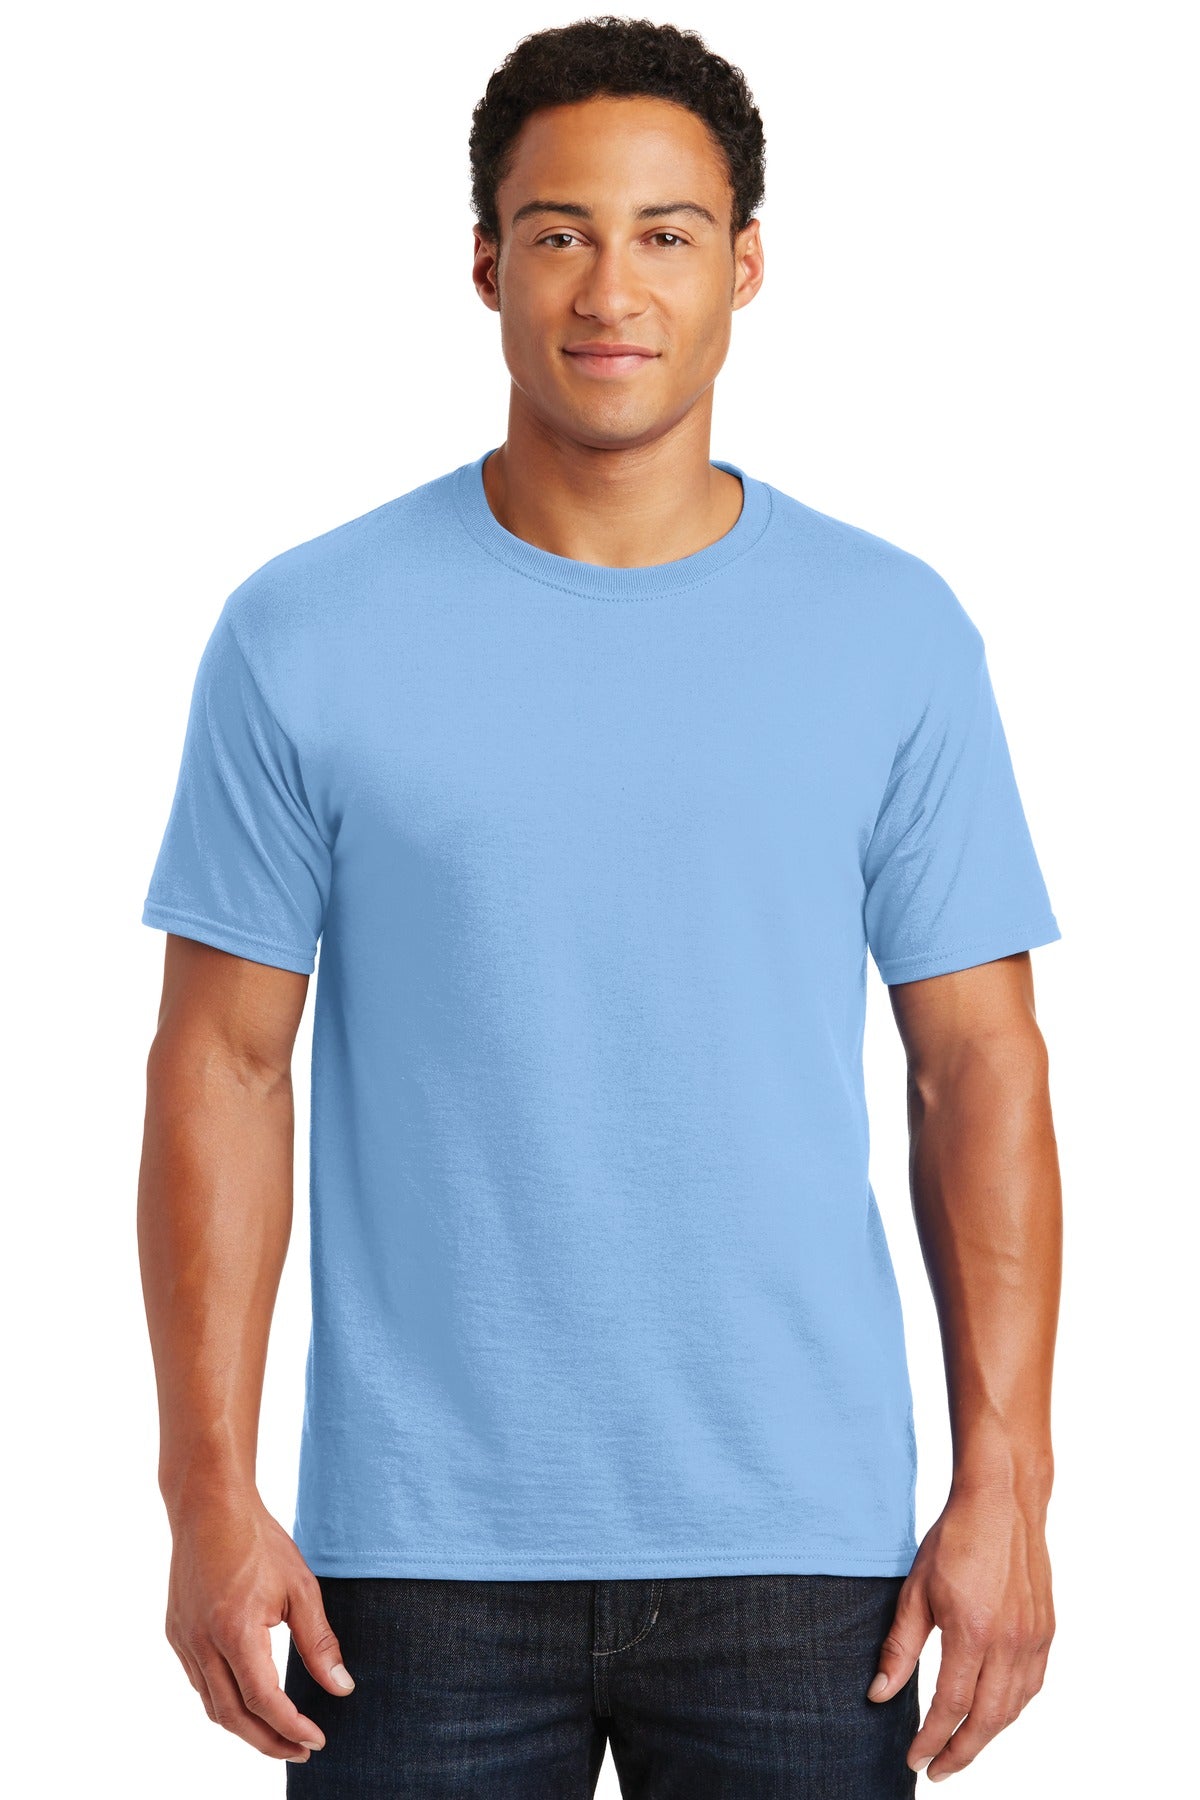 JERZEES® - Dri-Power® 50/50 Cotton/Poly T-Shirt. 29M [Light Blue] - DFW Impression